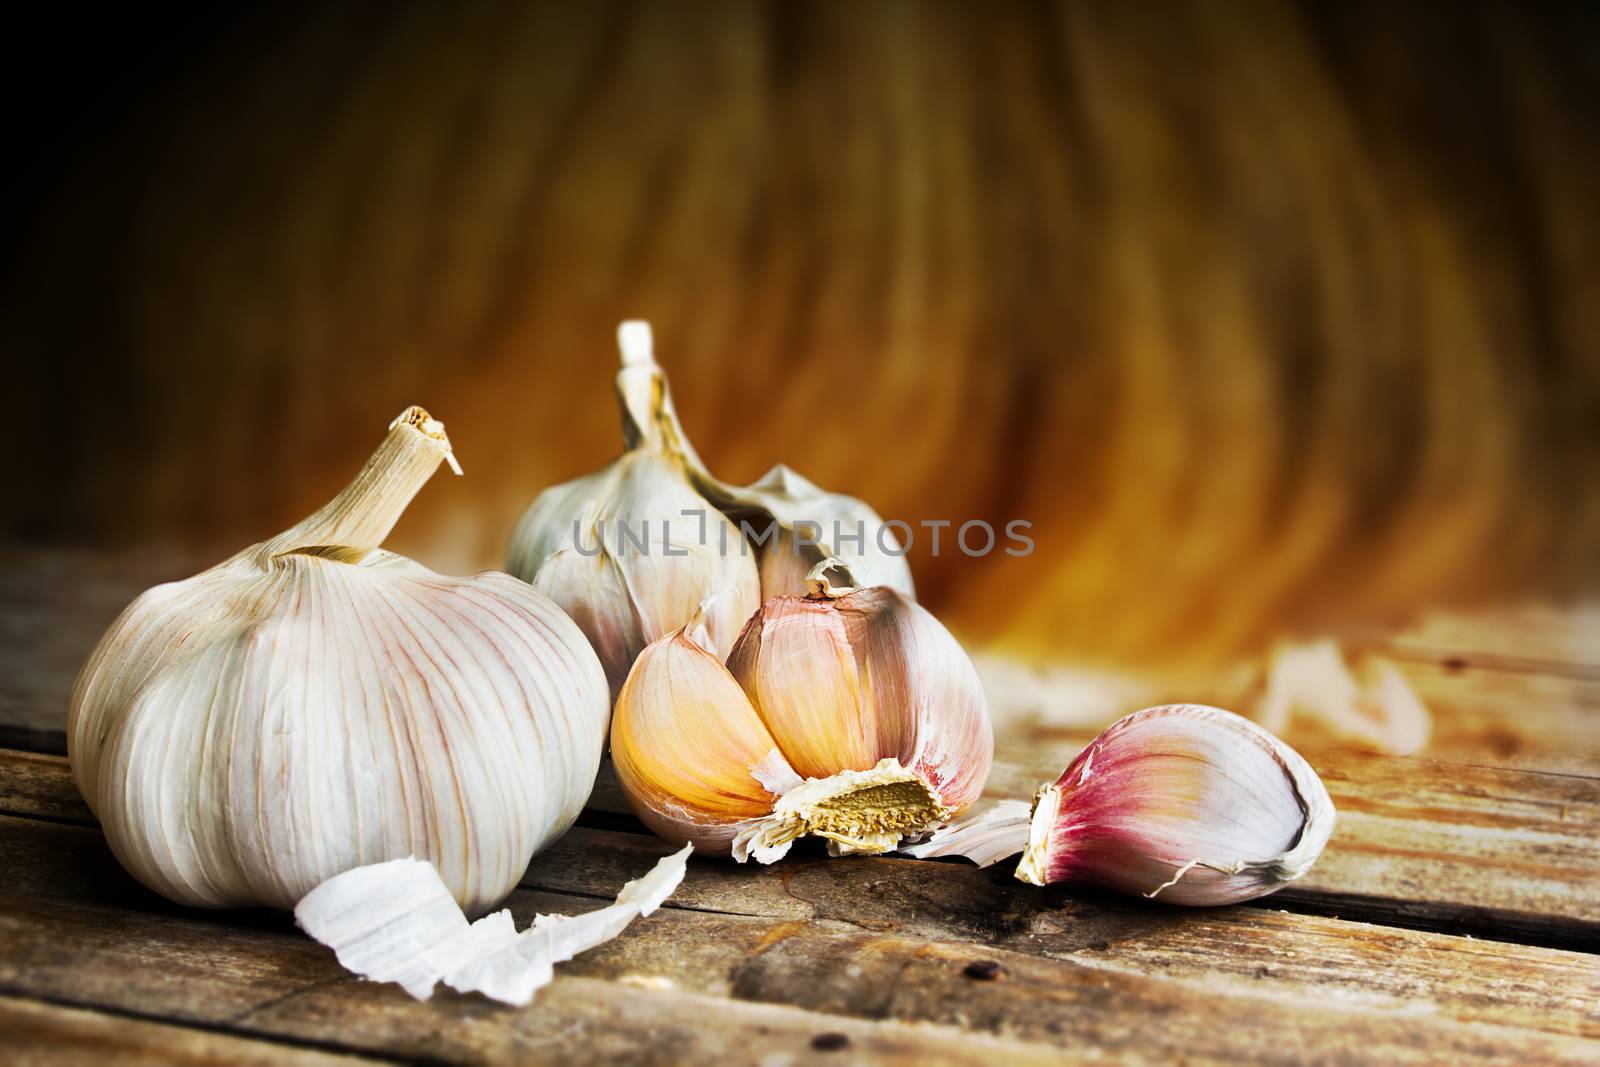 garlic by narinbg